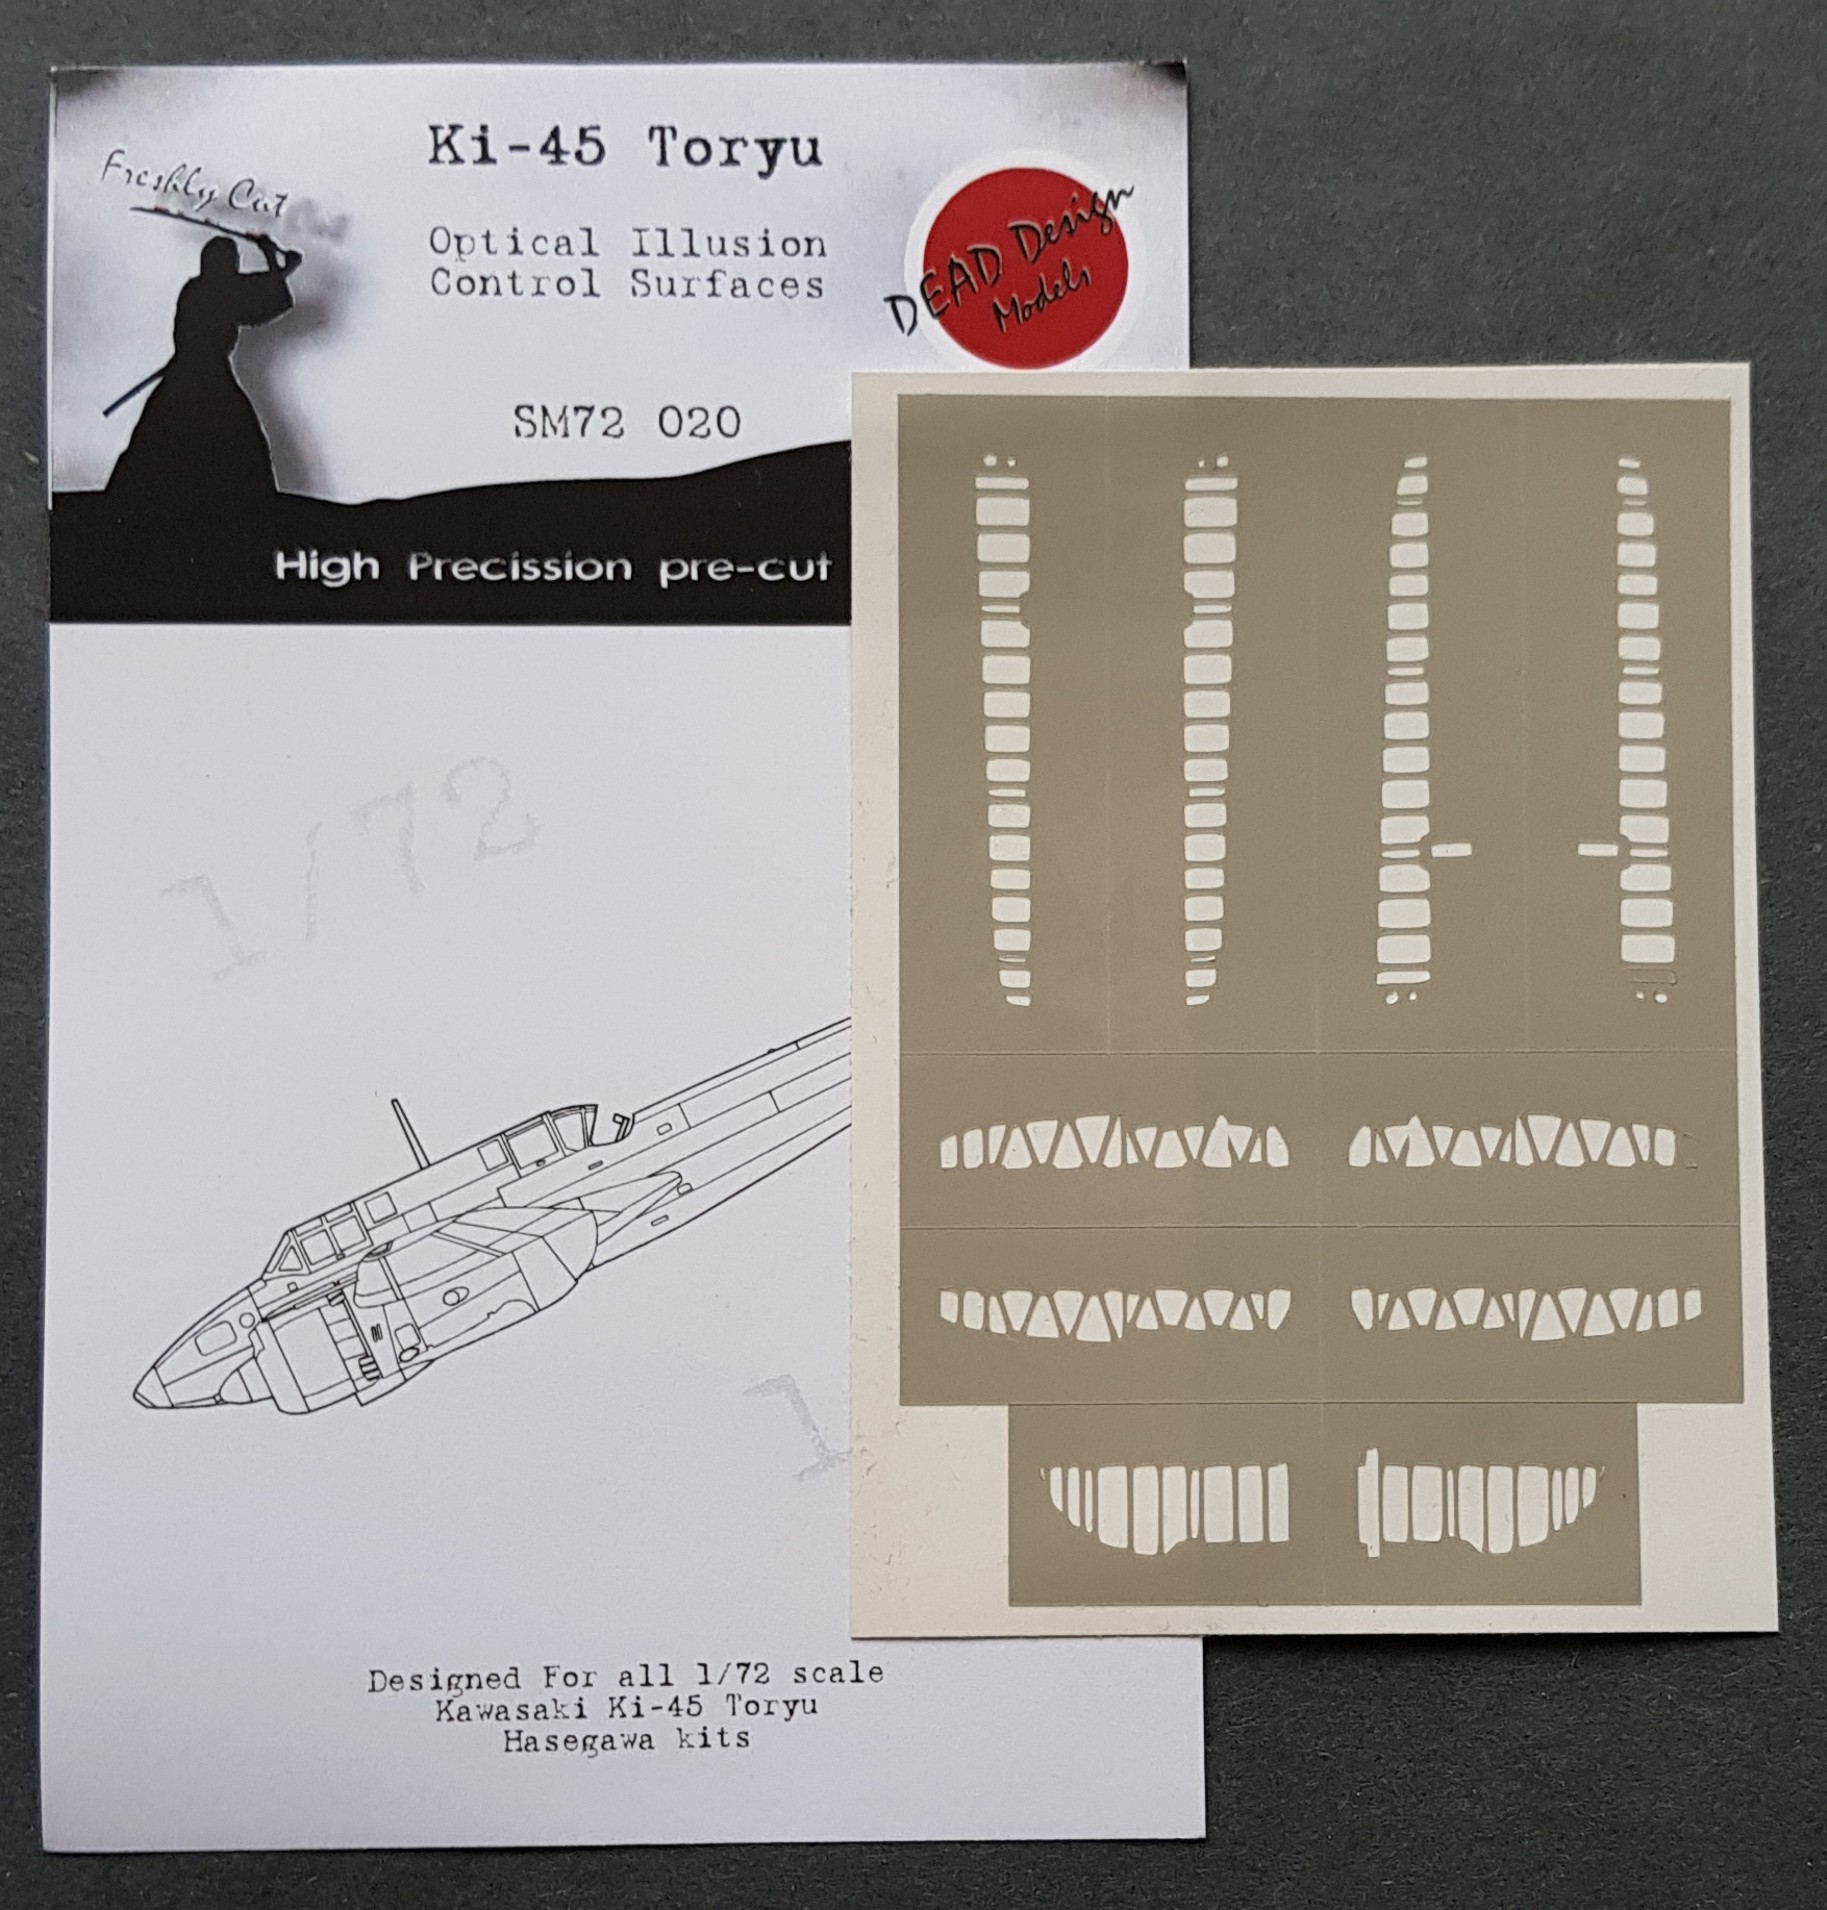  Dead Design Models Surfaces de contrôle Kawasaki Ki-45 Toryu (conçues